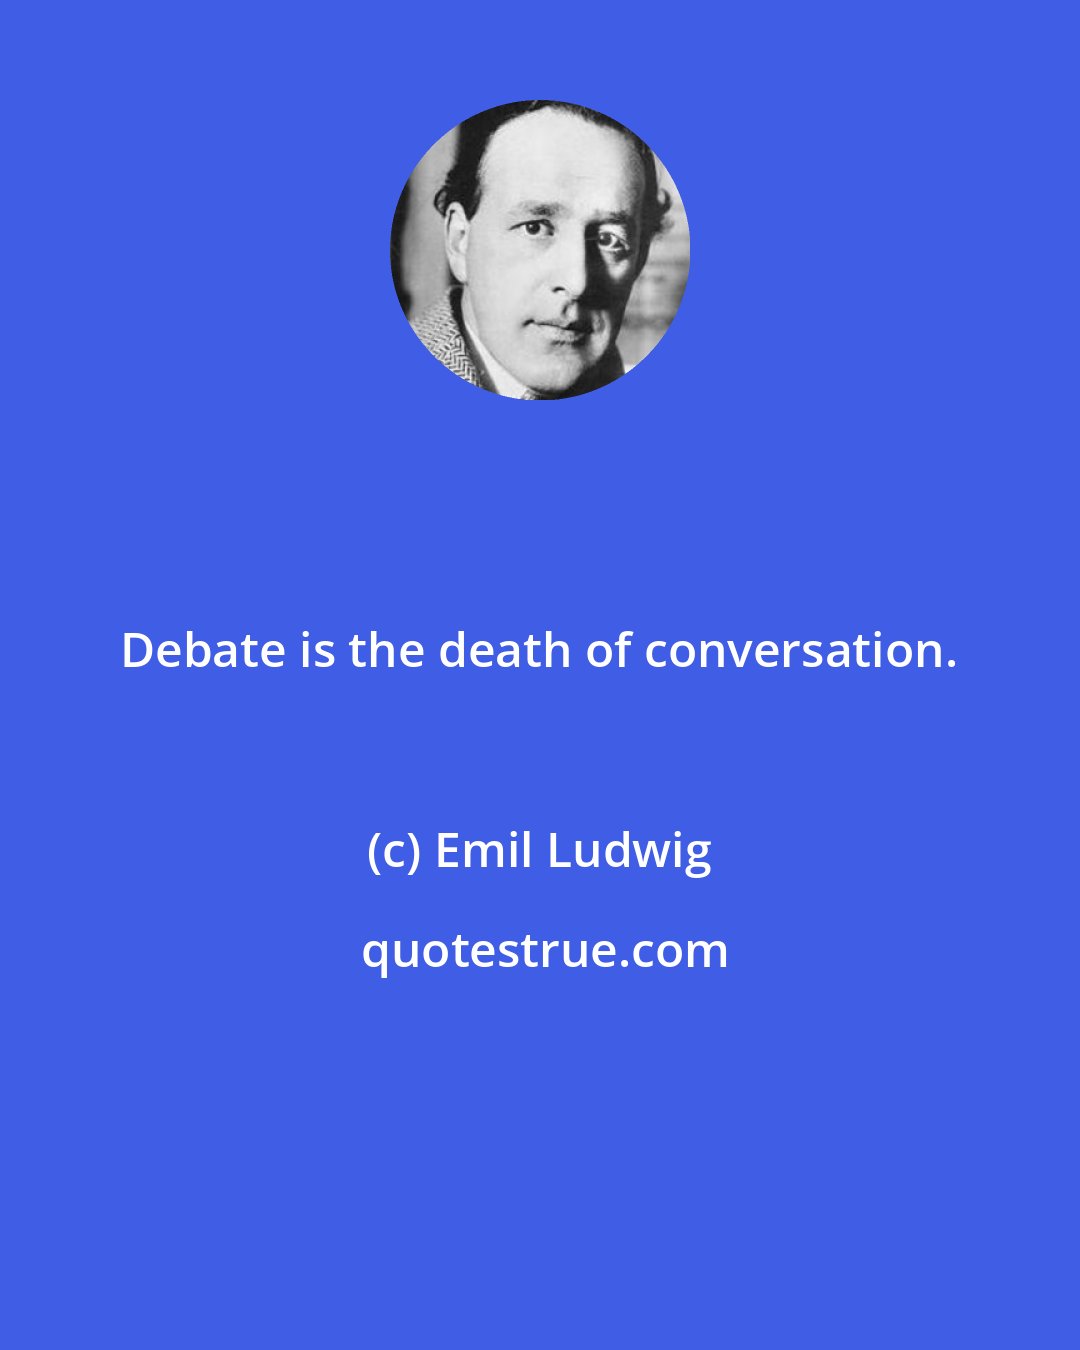 Emil Ludwig: Debate is the death of conversation.